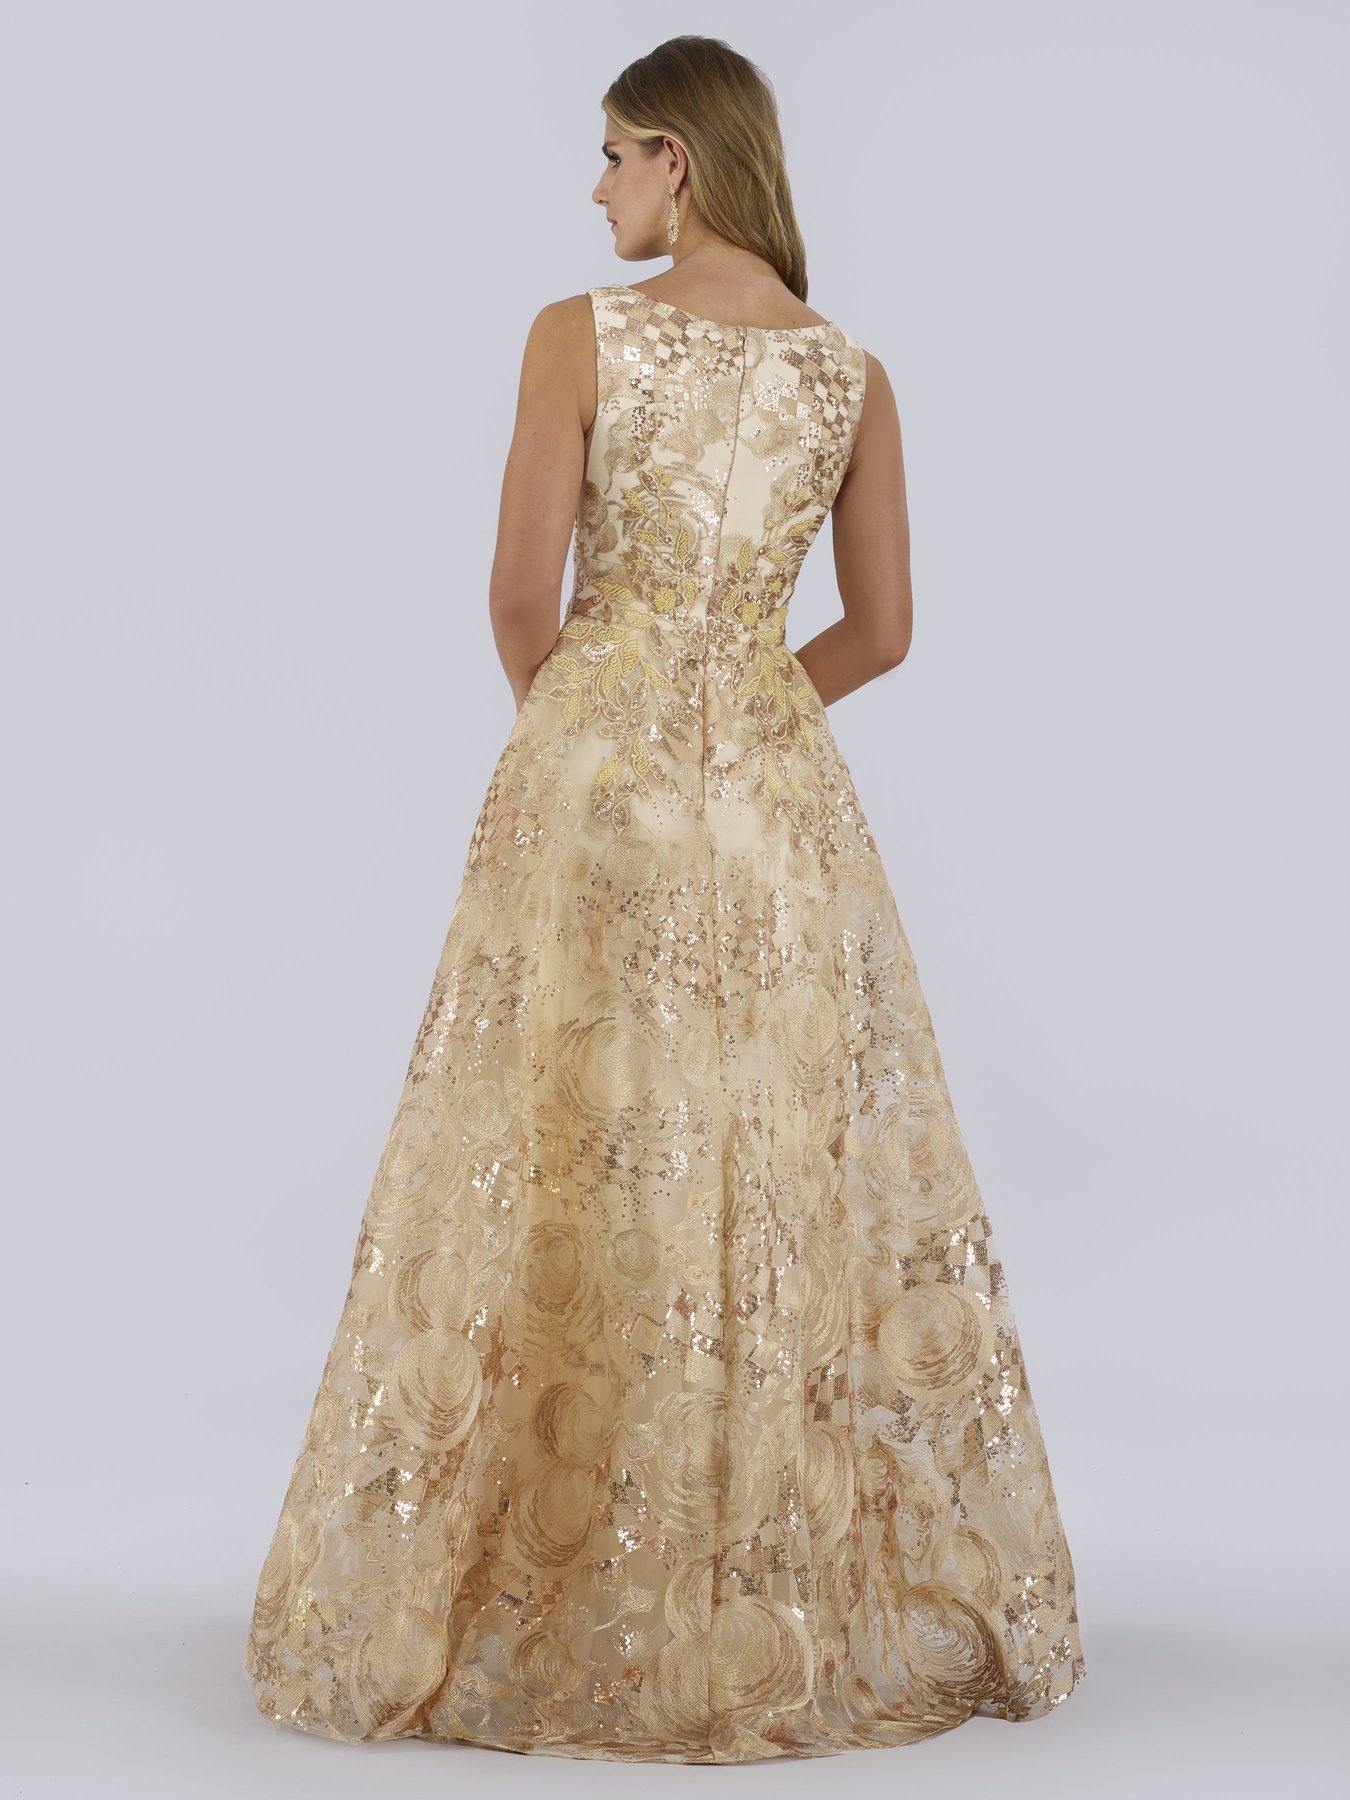 Lara Dresses Long Sleeveless Prom Dress 29748 - The Dress Outlet